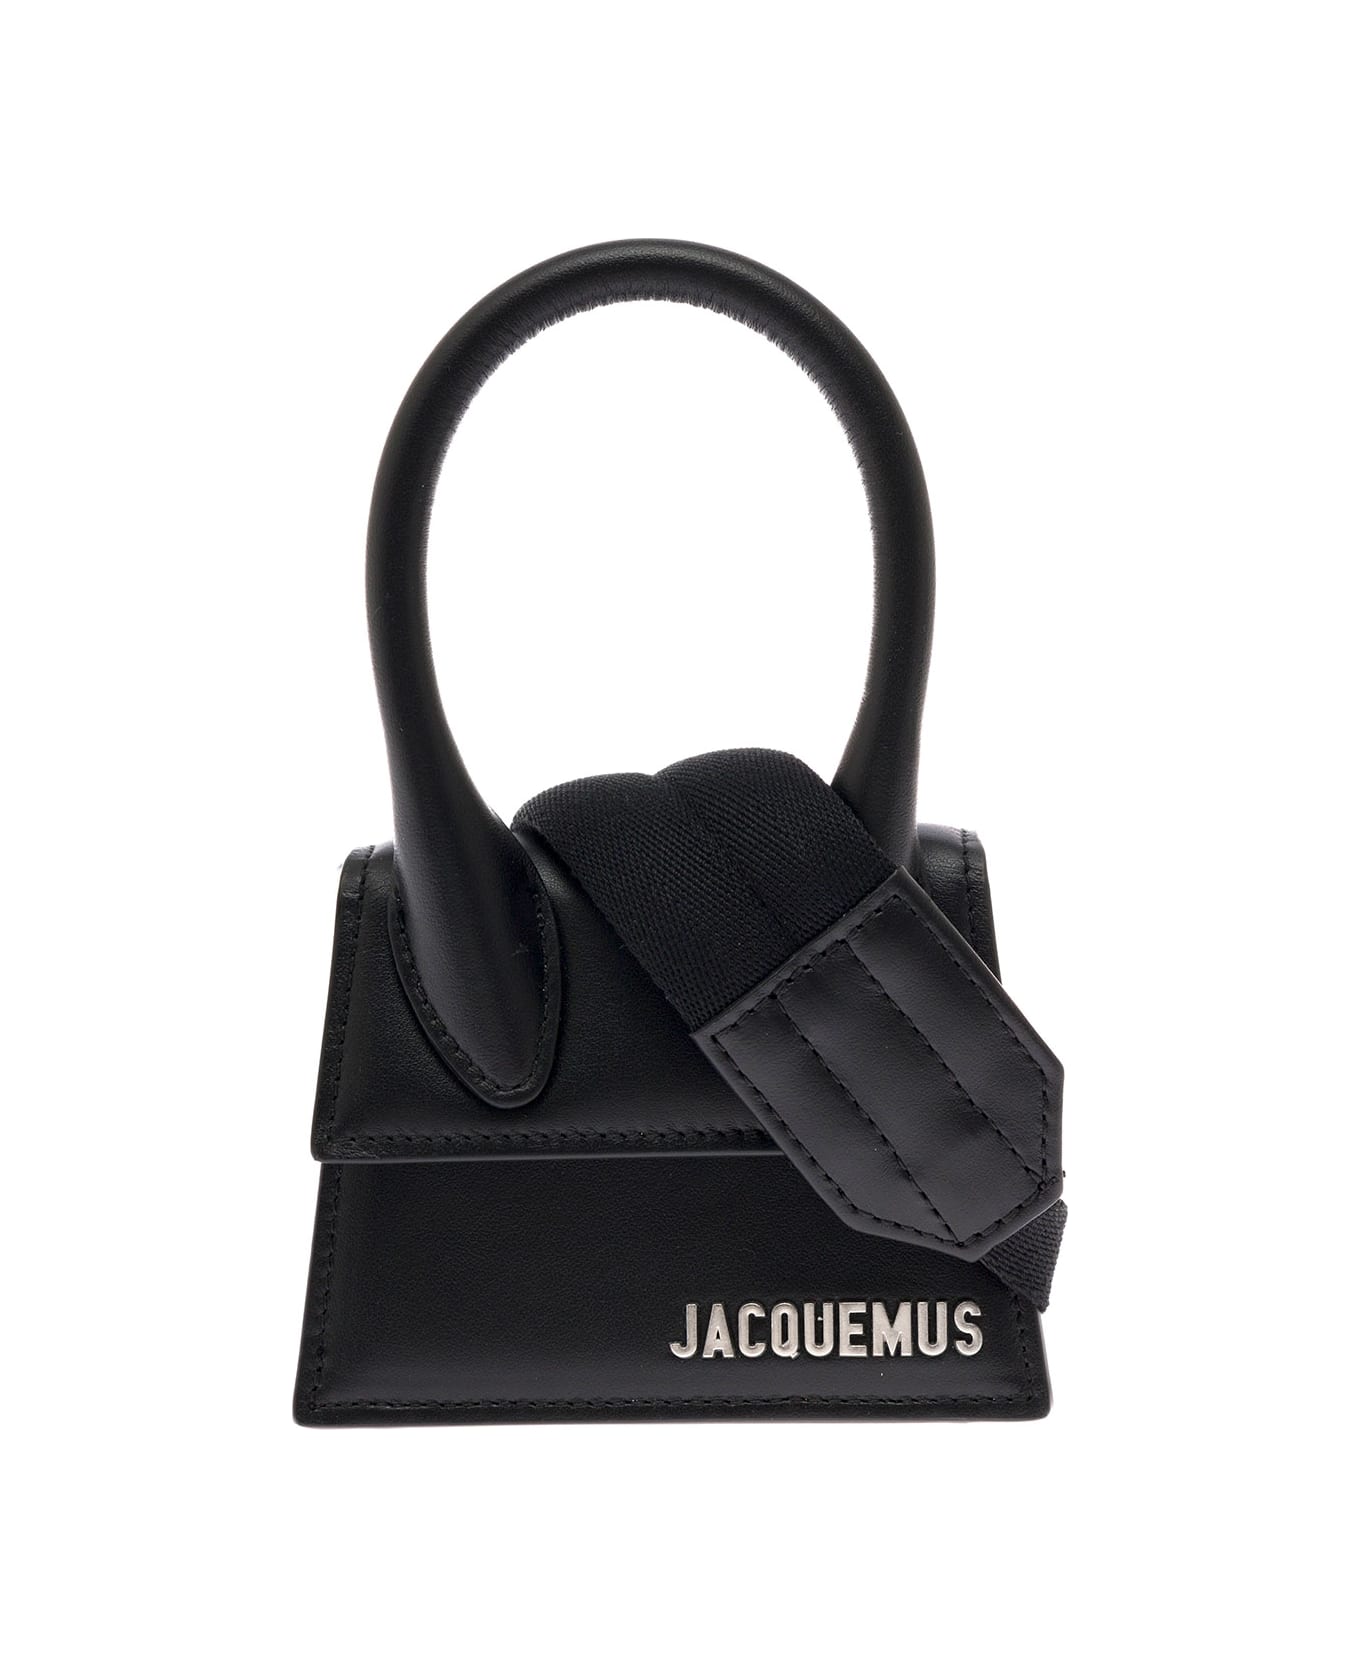 Jacquemus Man's Le Chiquito Homme  Black Leather Crossbody Bag - Black